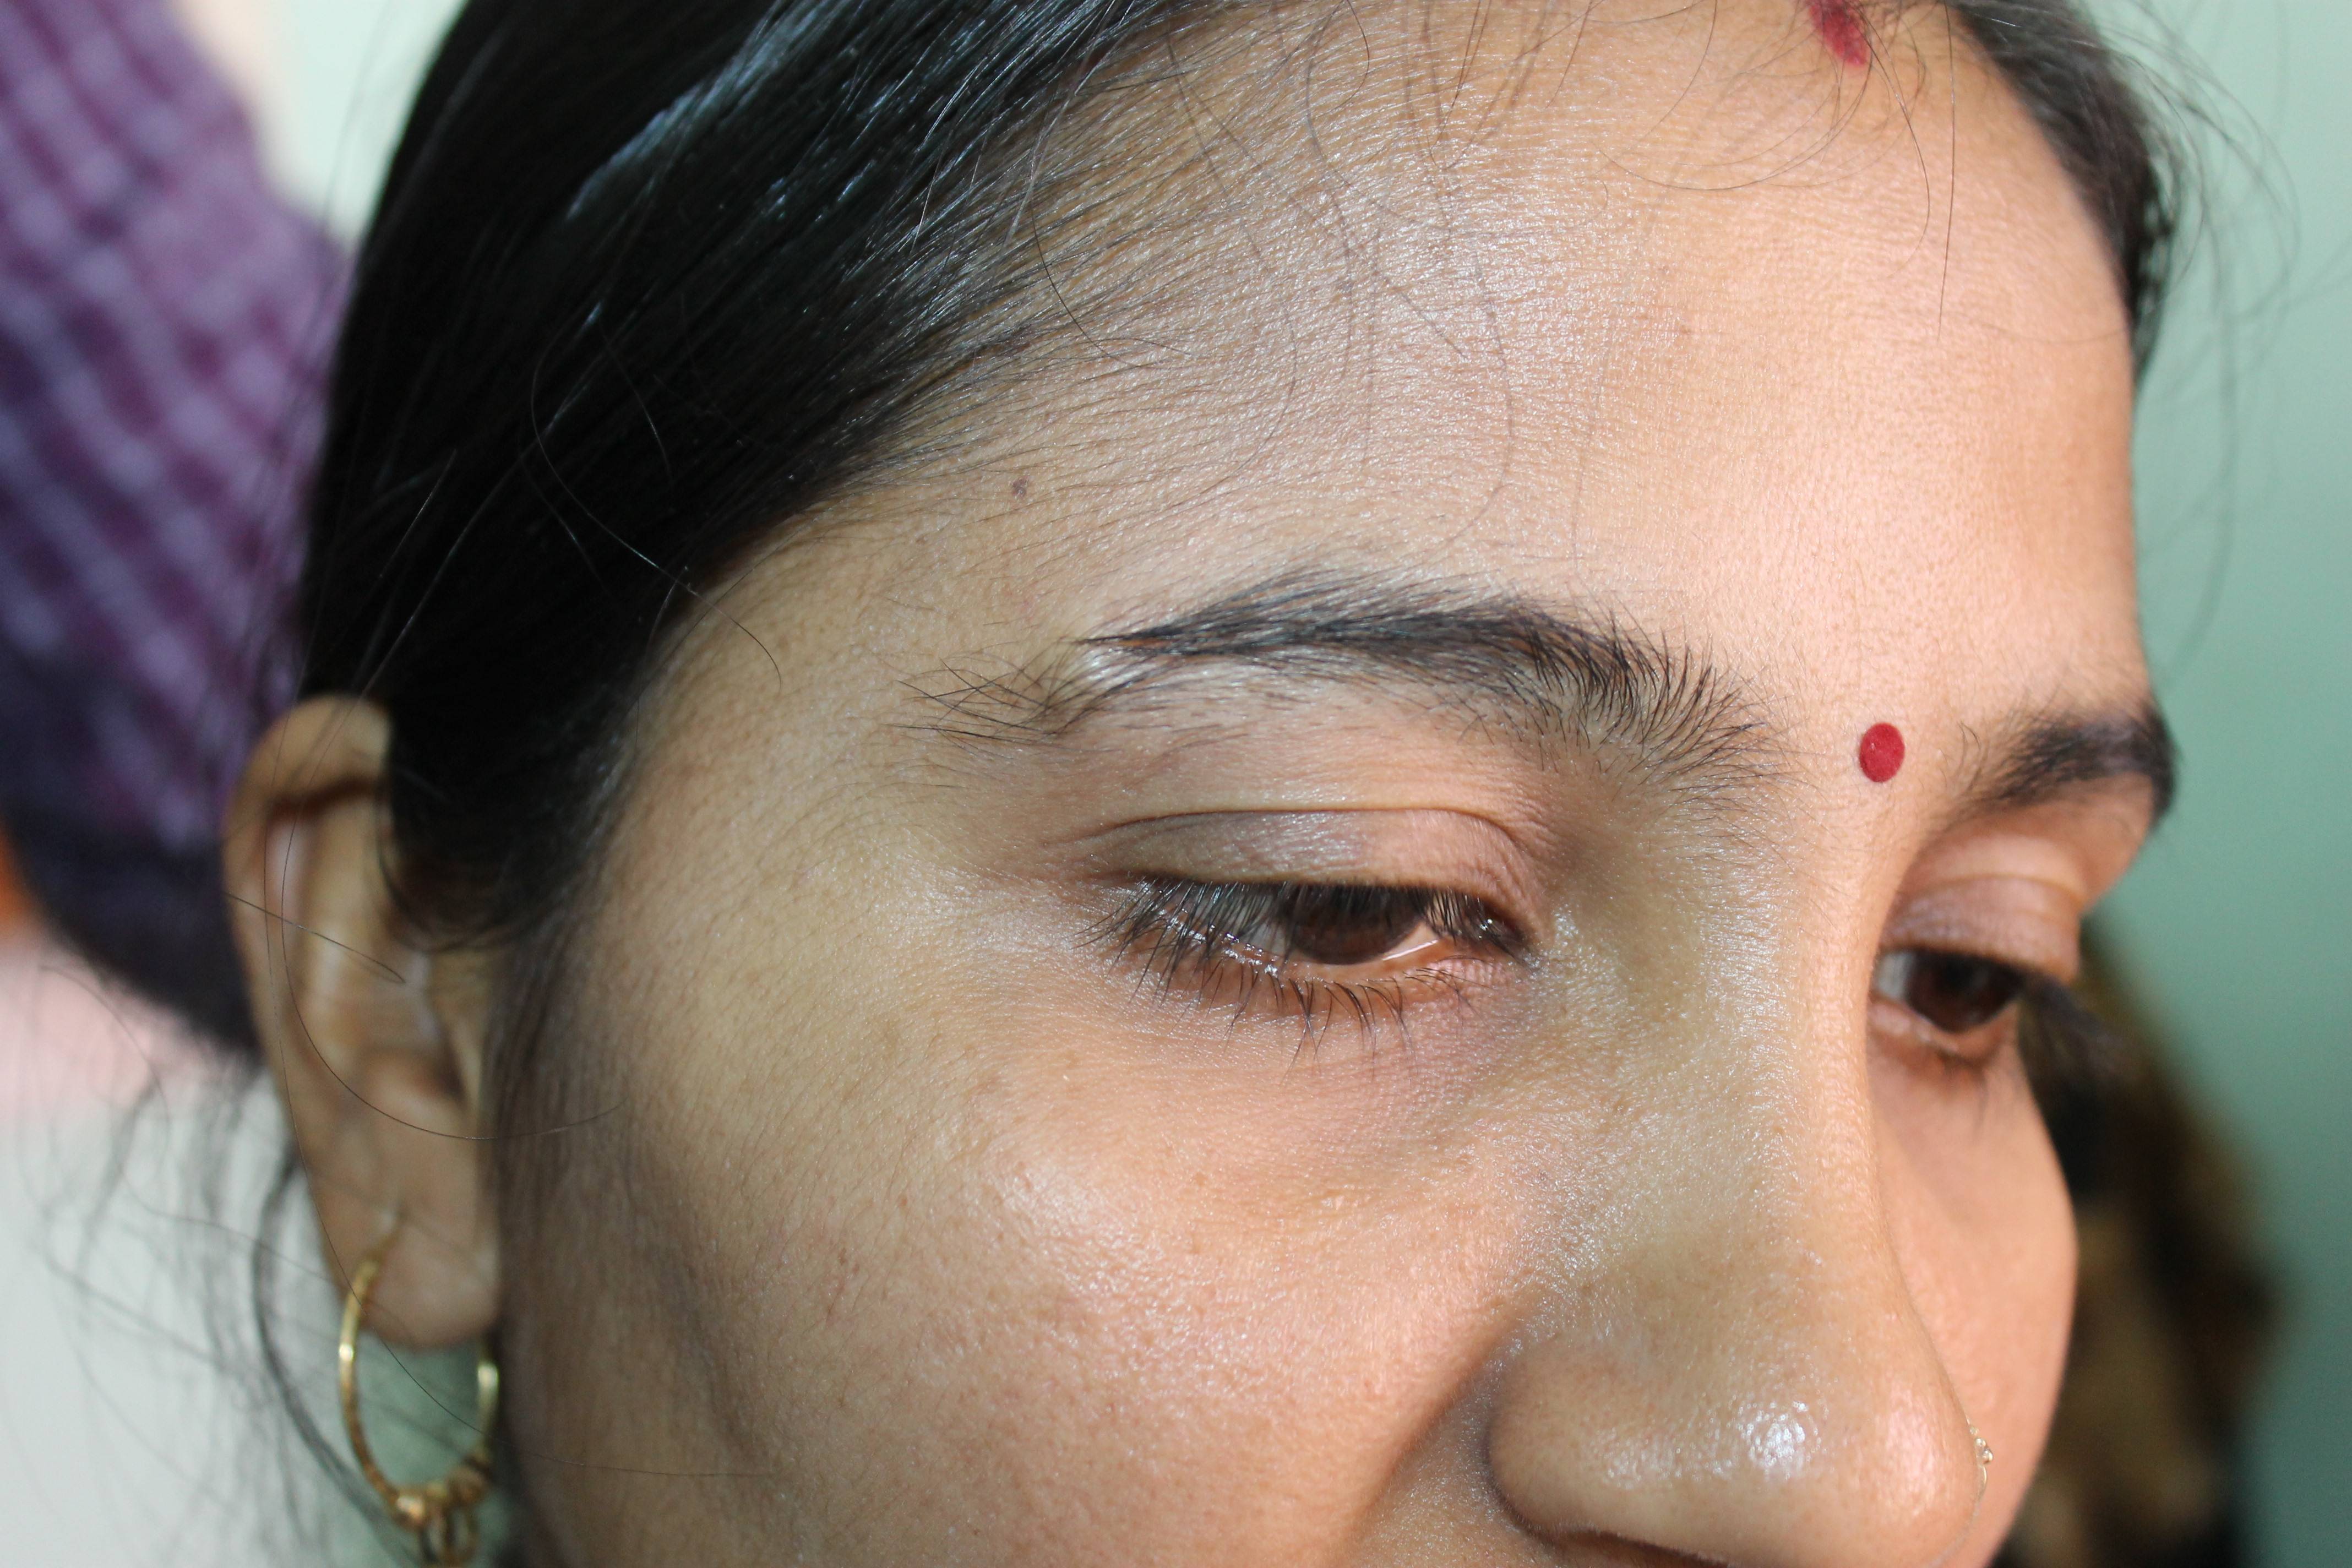 dermoid cyst on face